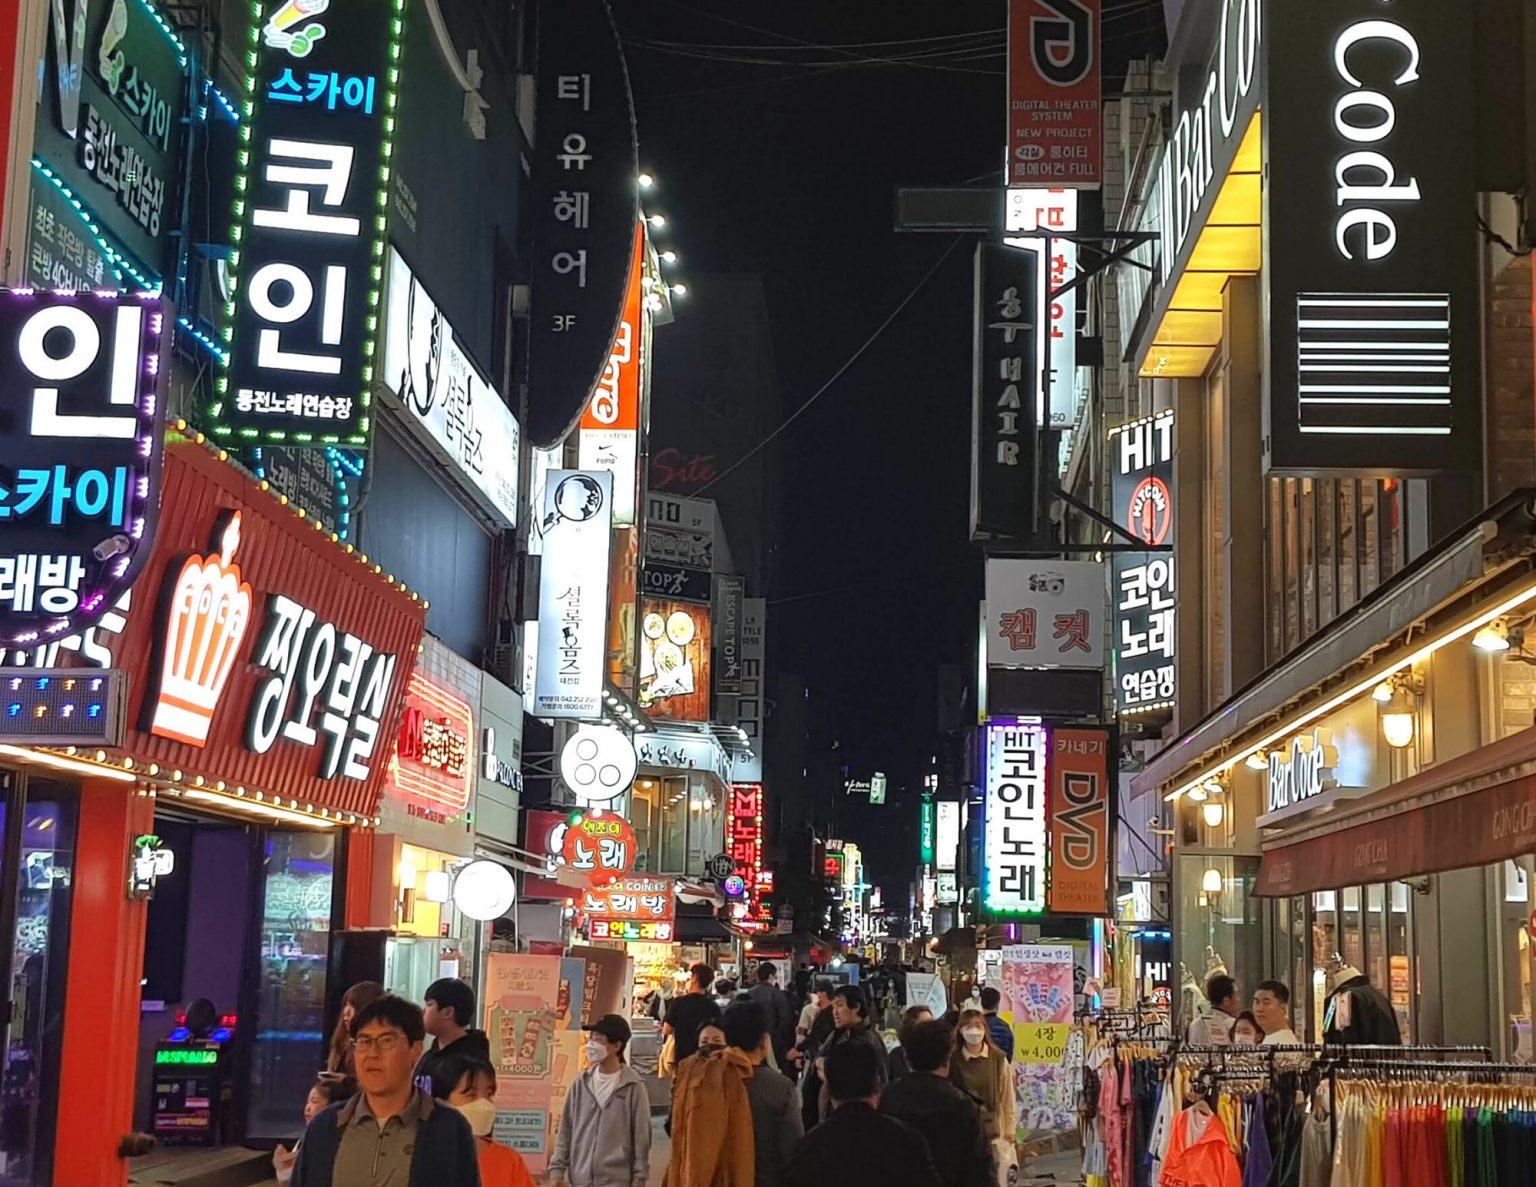 trip to korea cost reddit